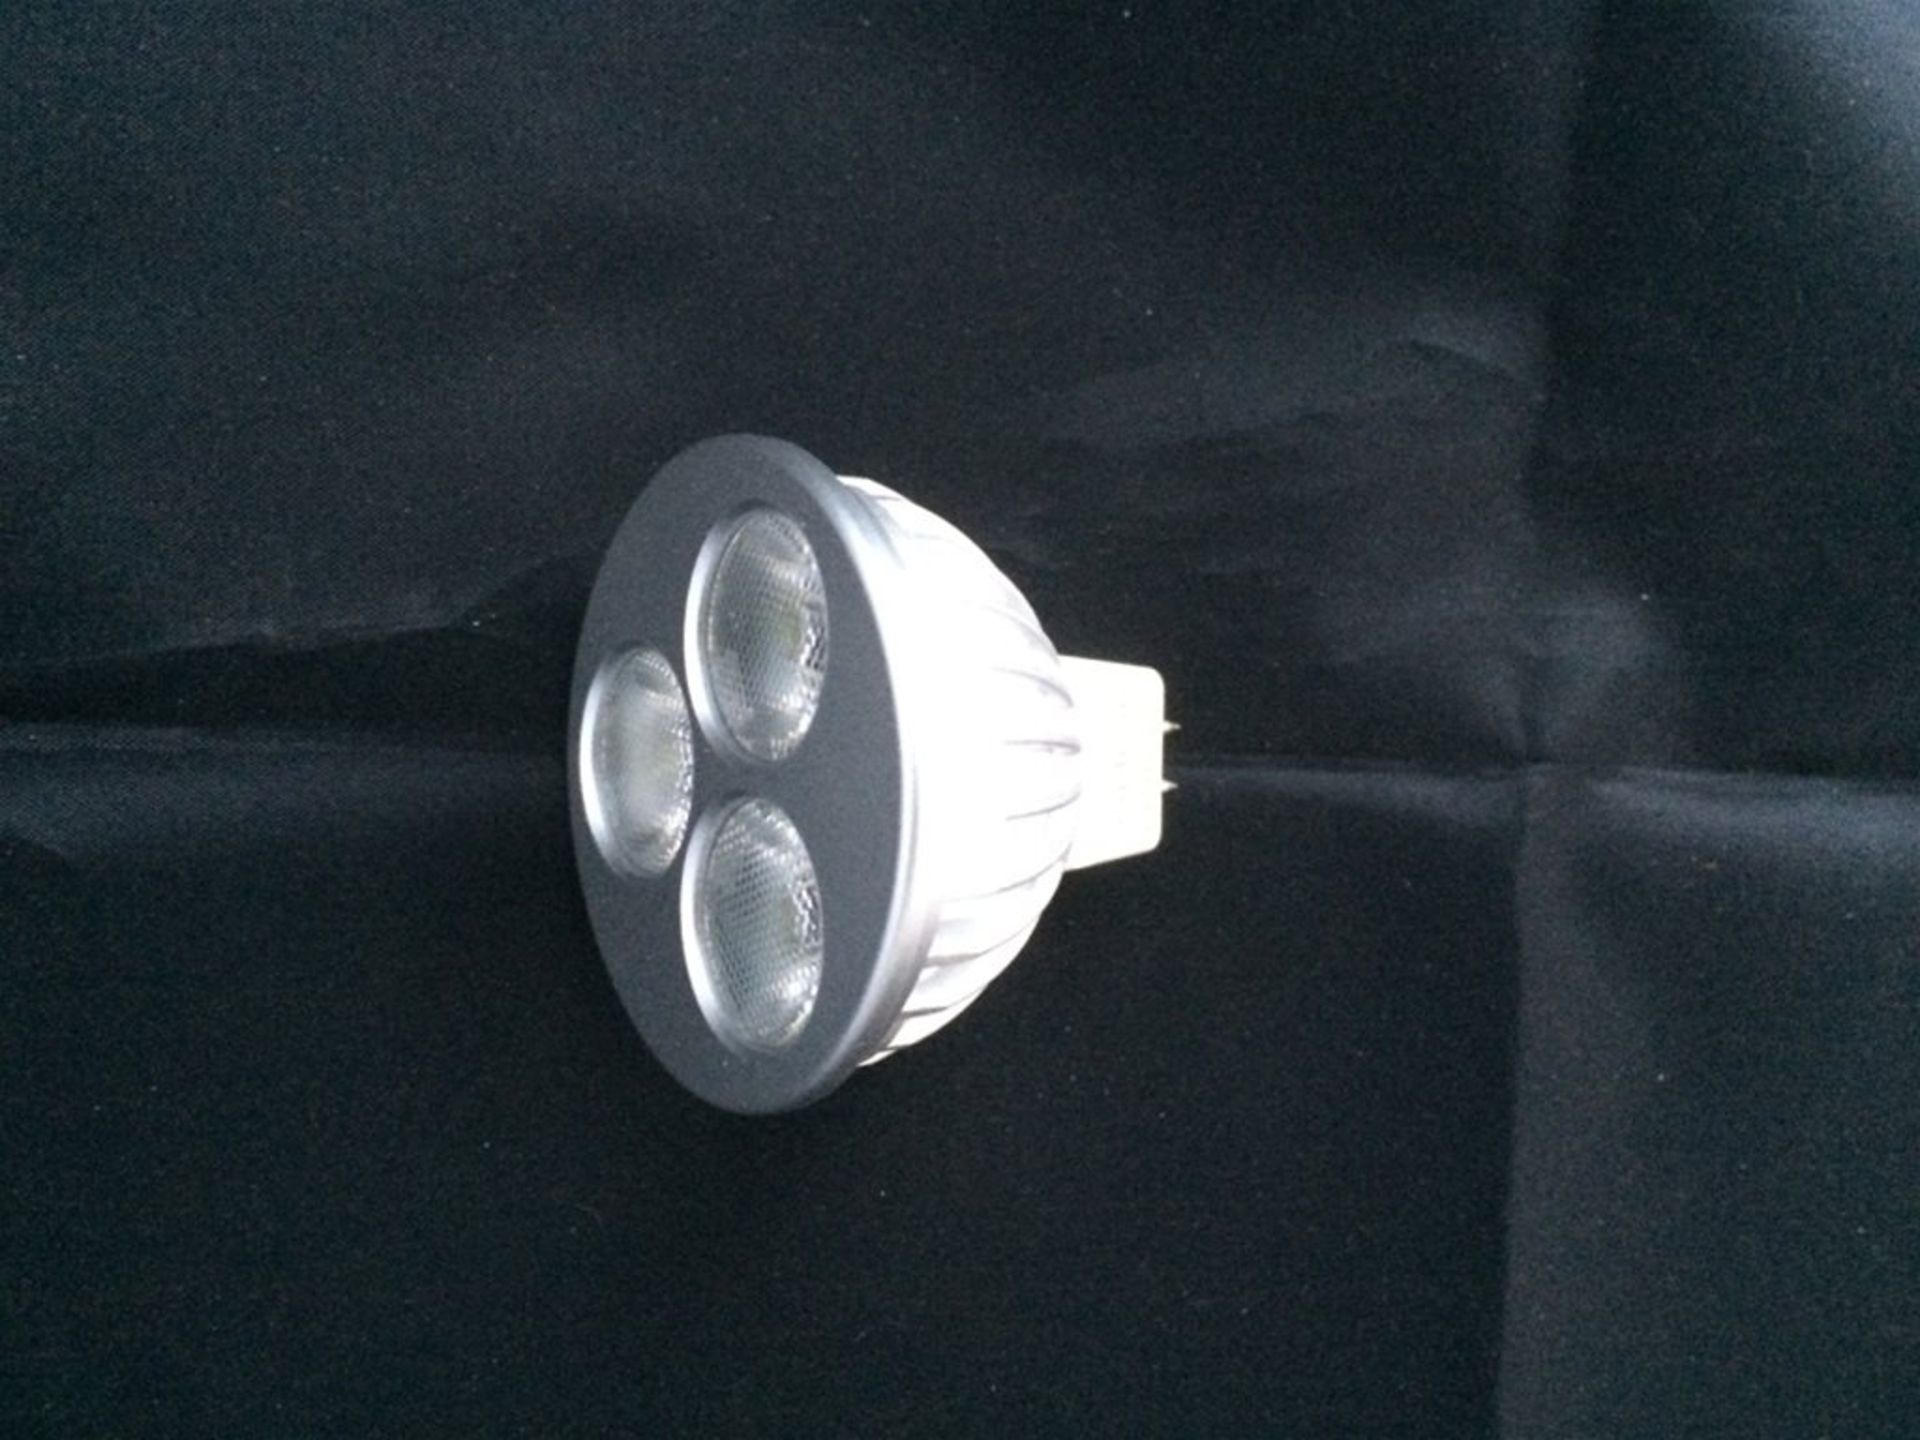 50x LED 3W GU10 Lamps - Image 4 of 5